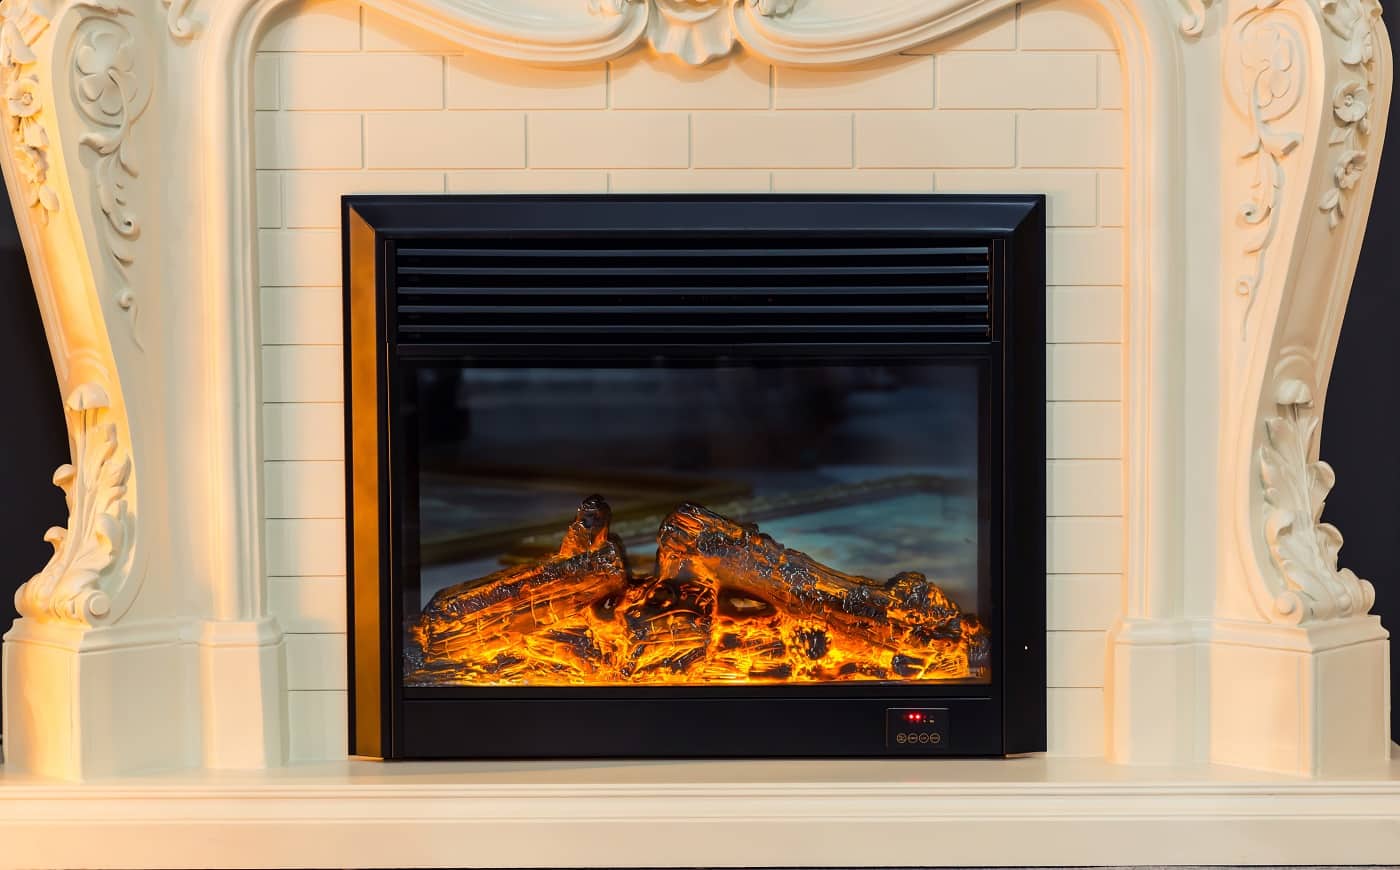 Modern electric fireplace. Closeup view